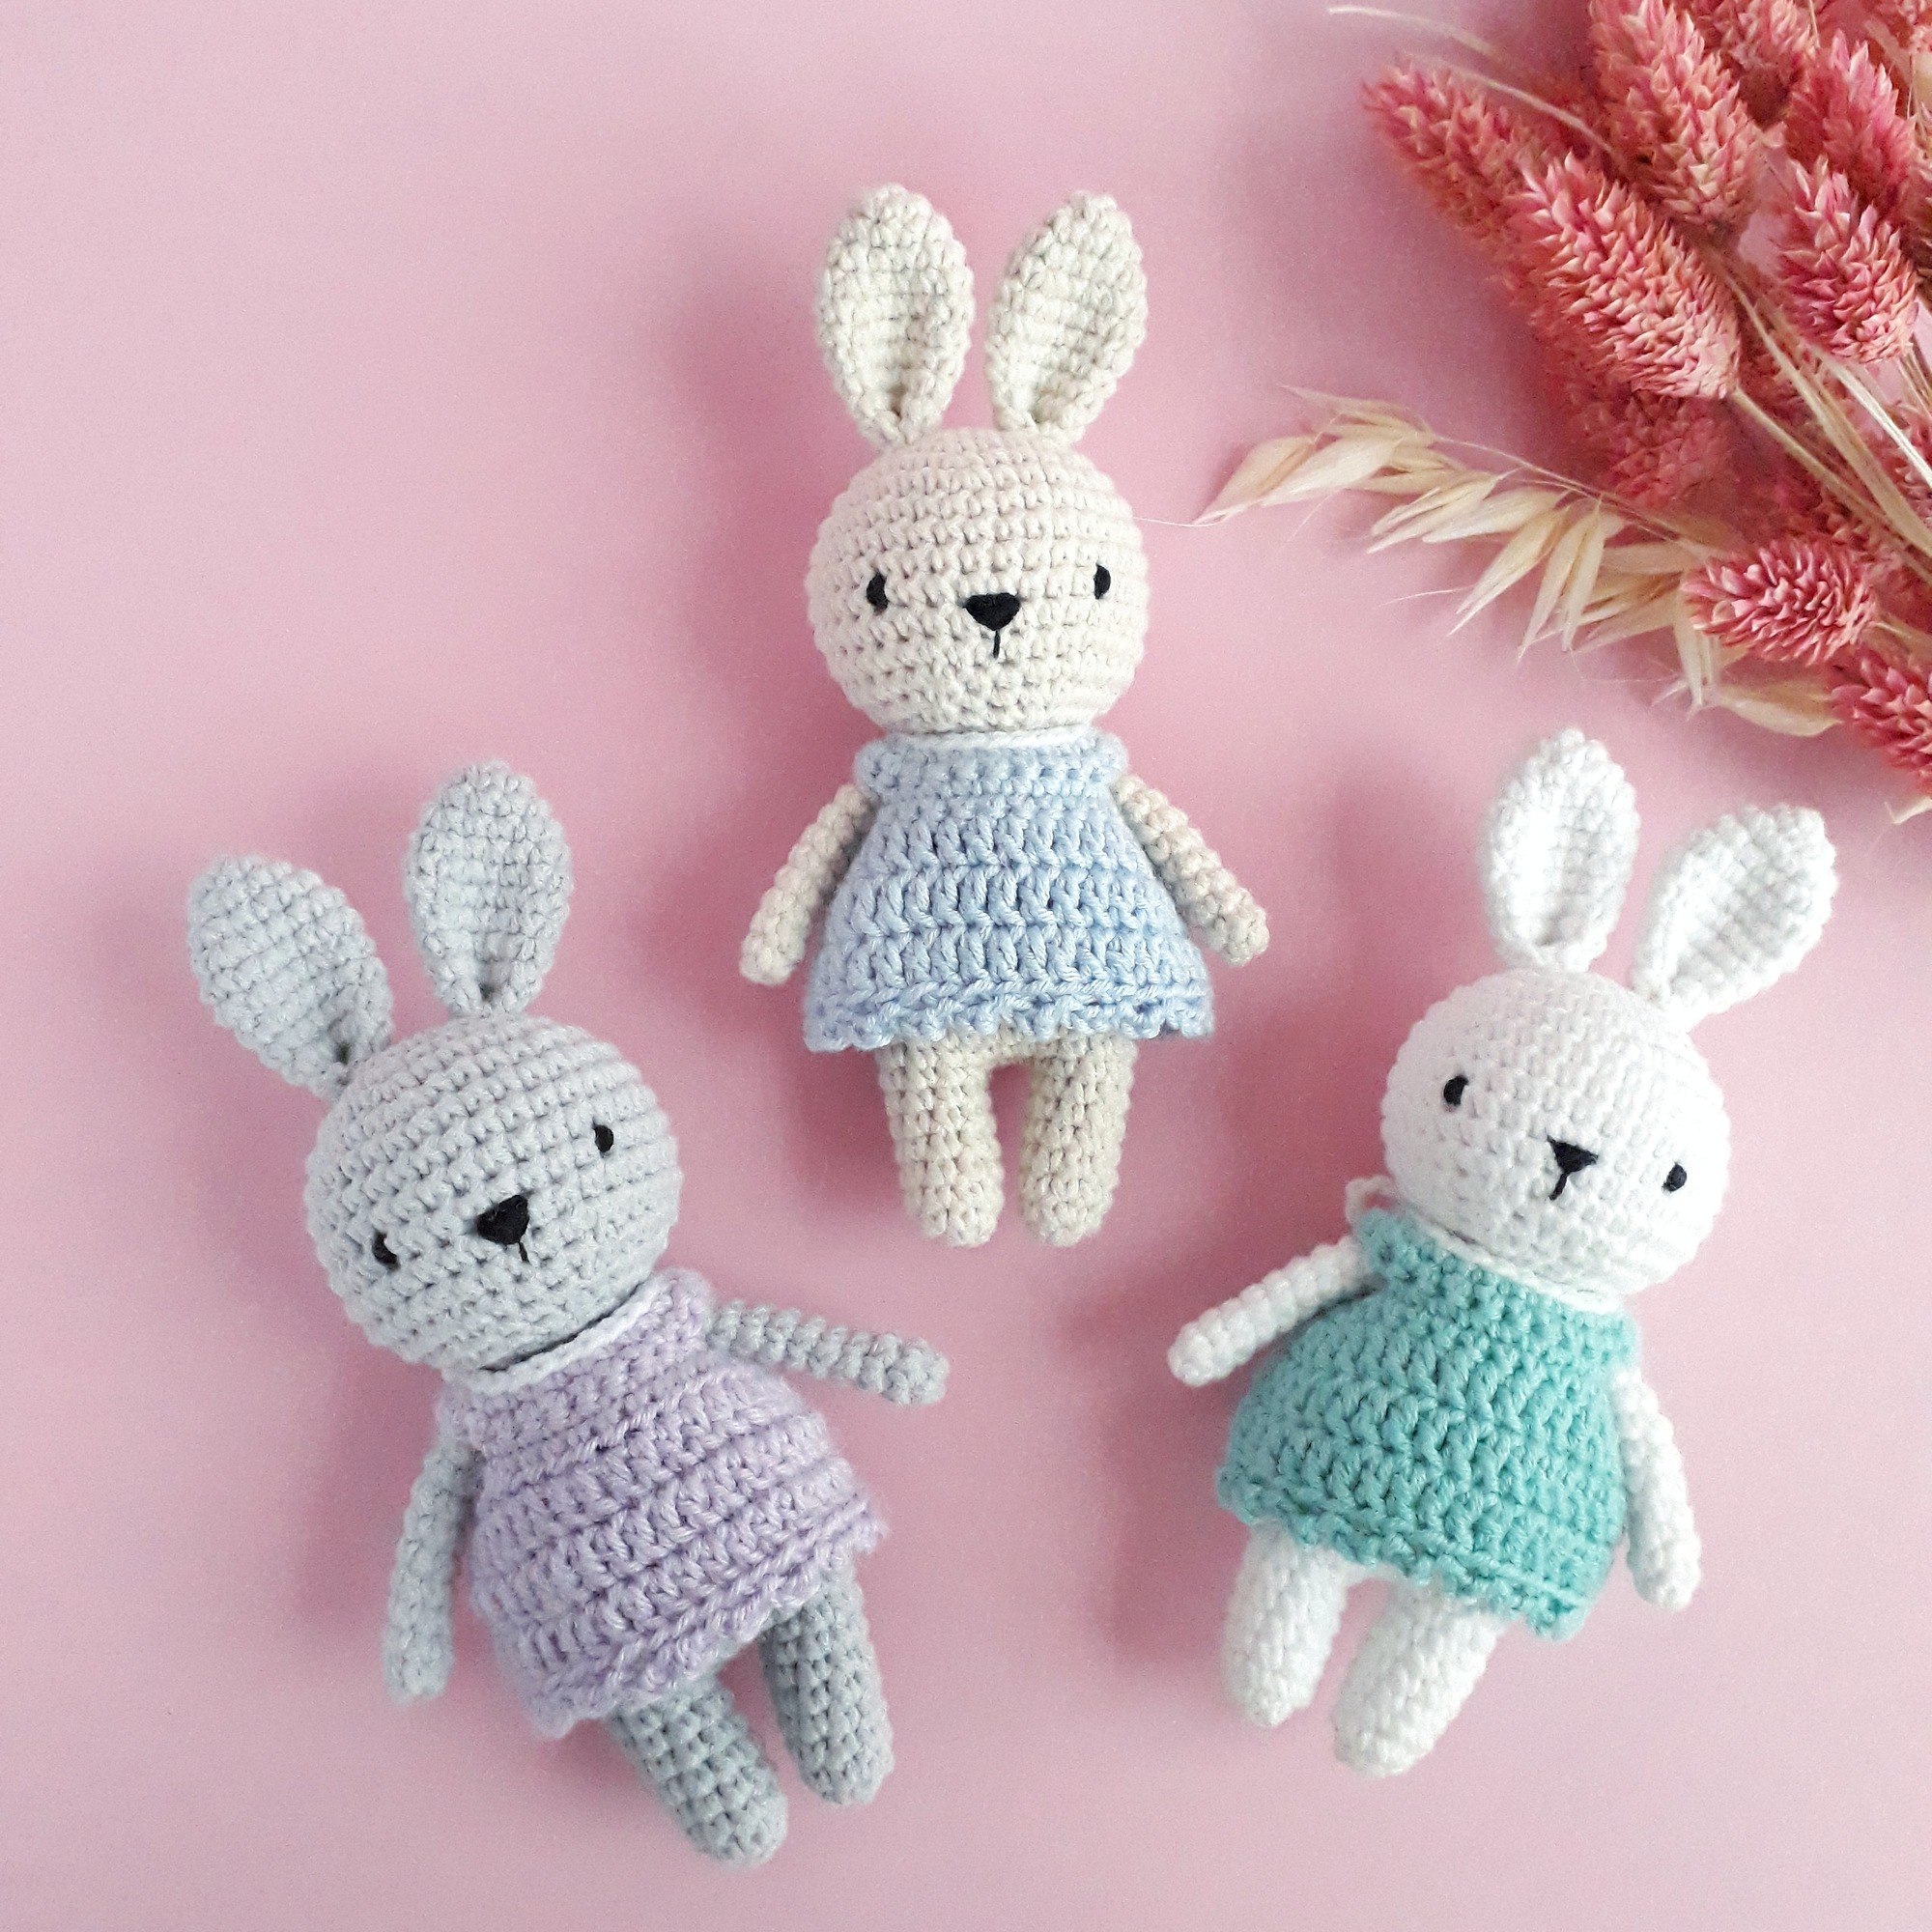 5+ New Bunny Free Crochet Patterns - Your Crochet